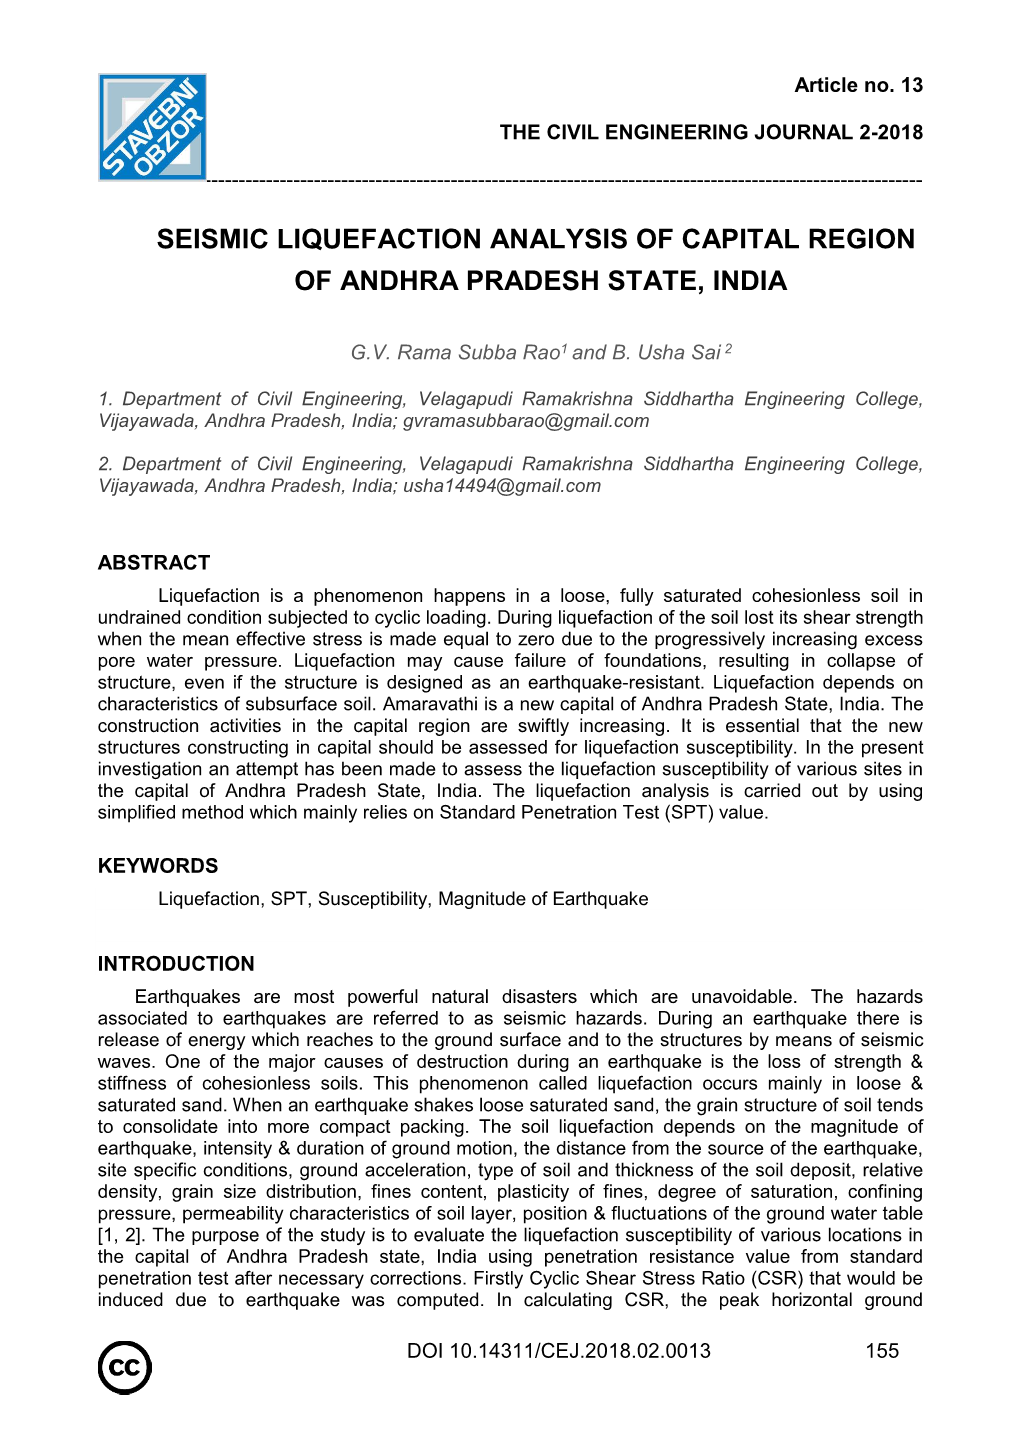 Seismic Liquefaction Analysis of Capital Region of Andhra Pradesh State, India